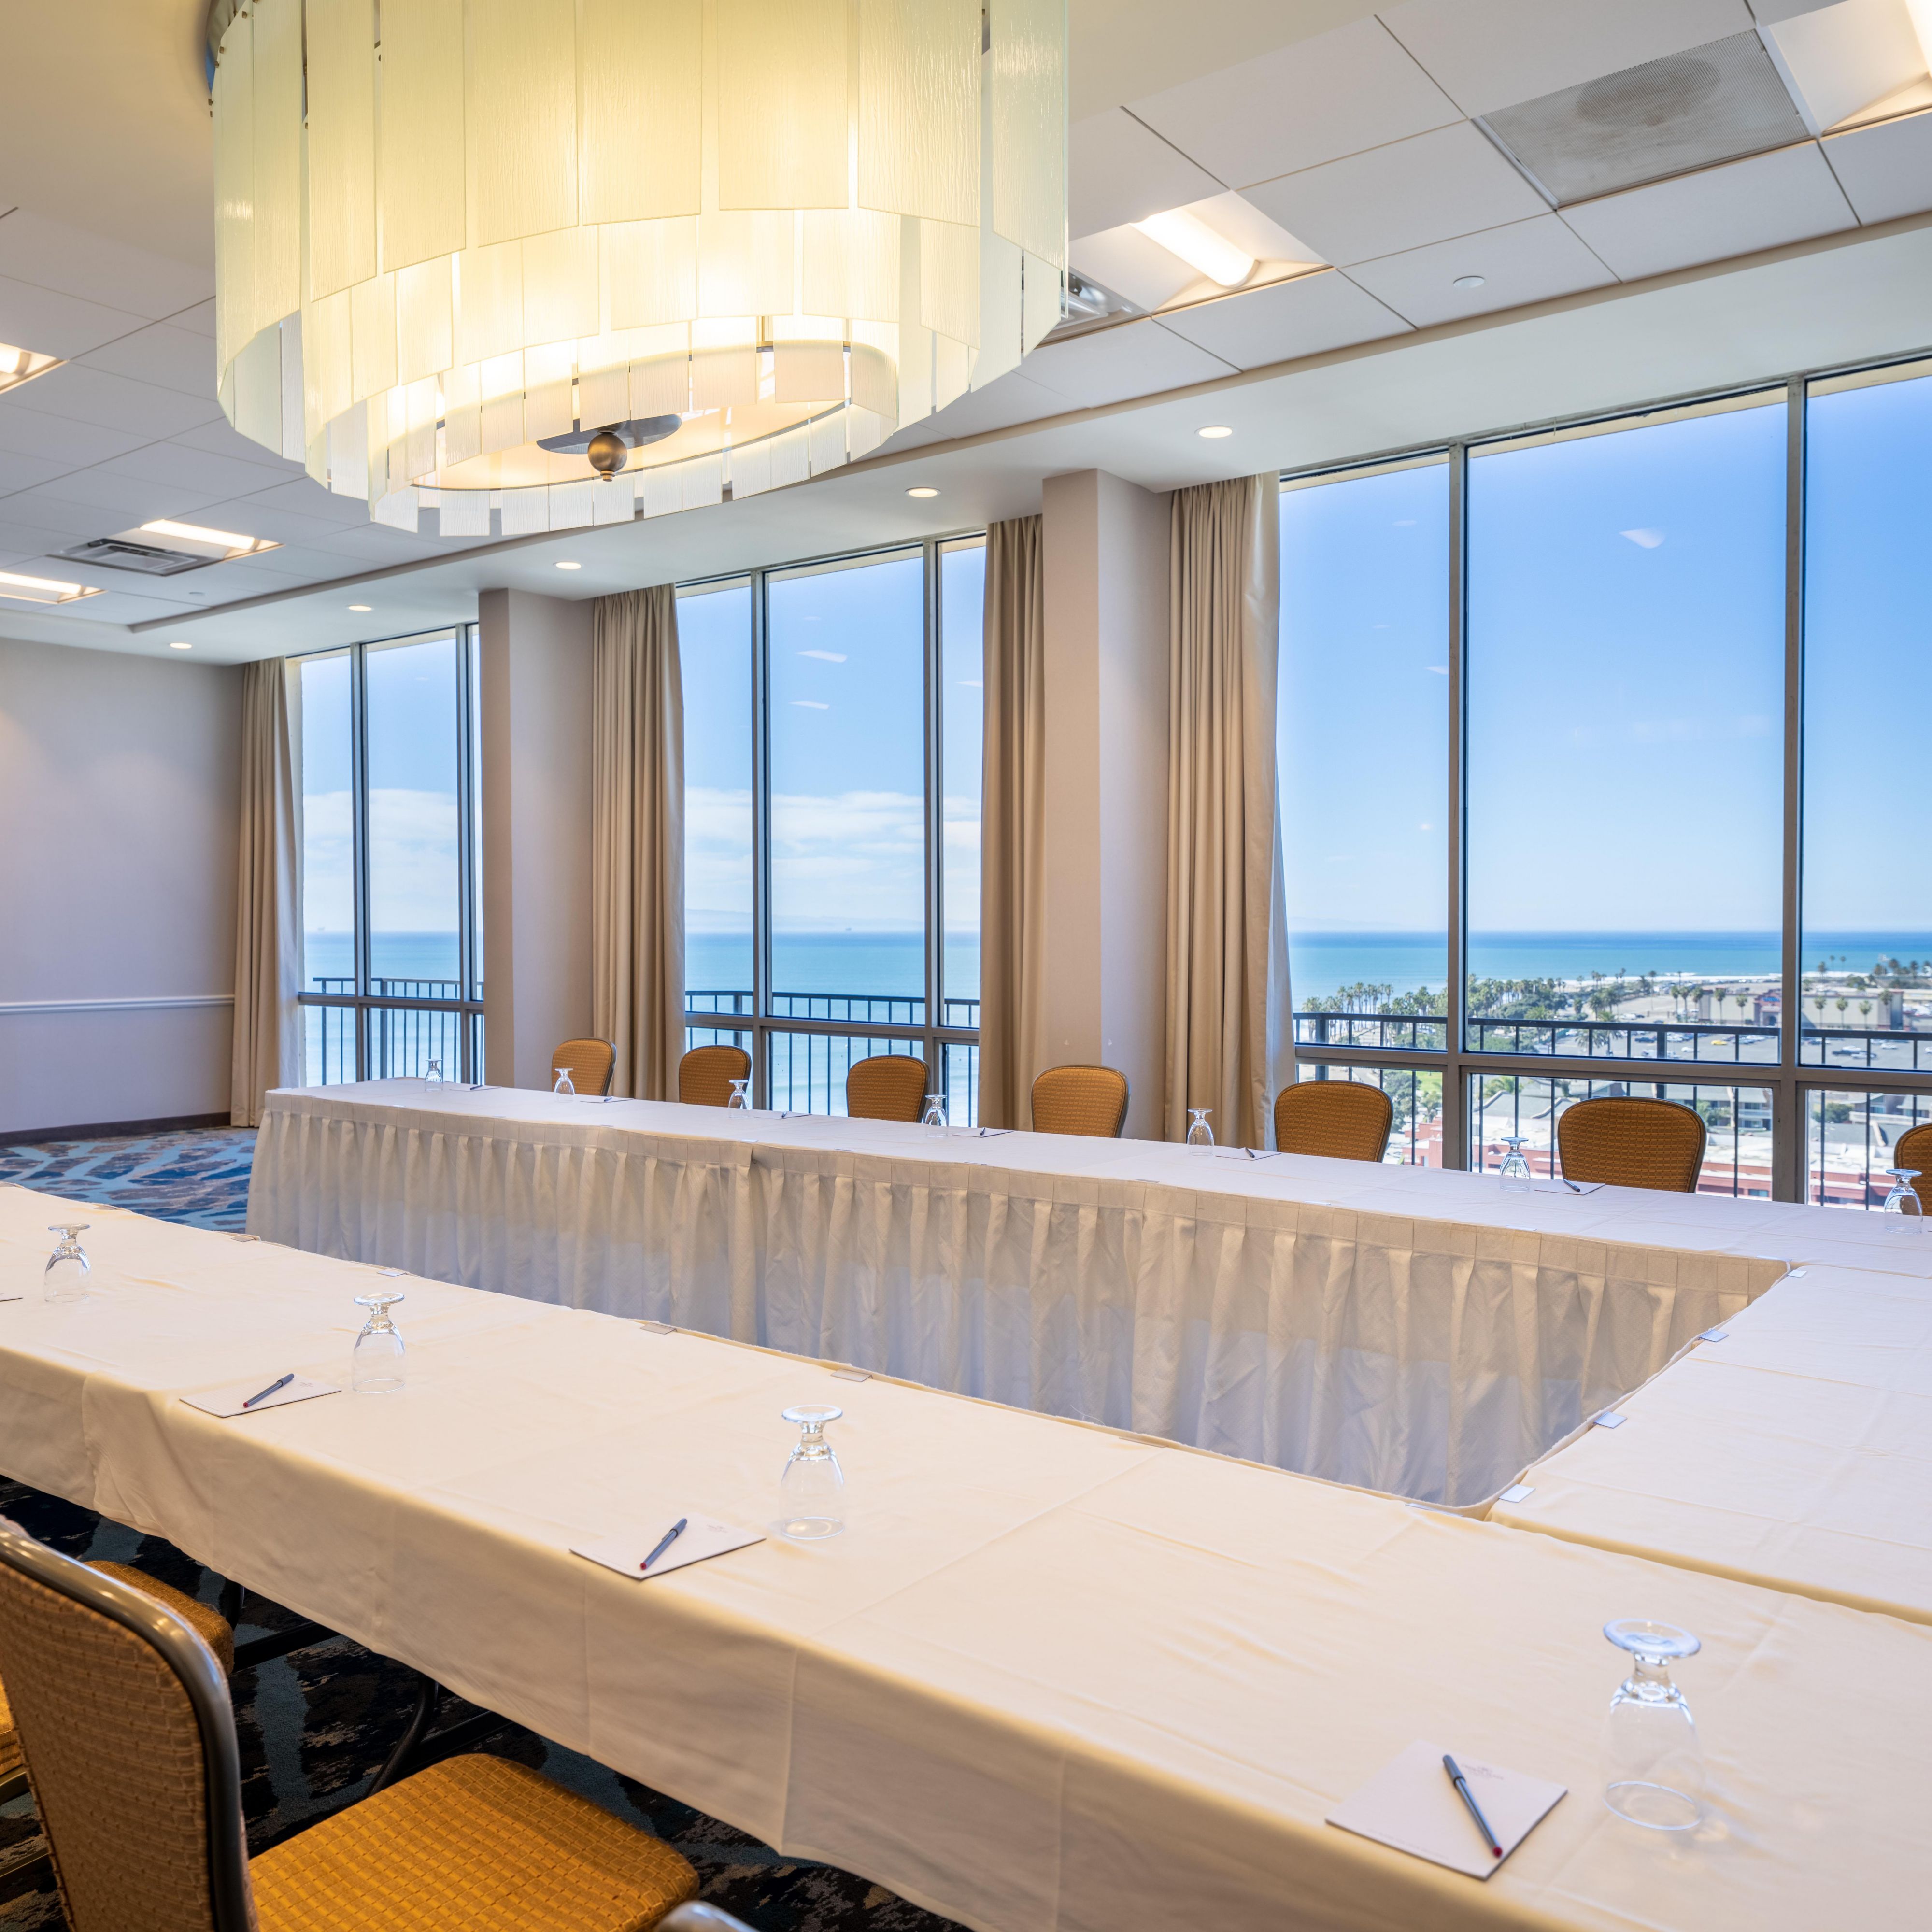 Bay View room, an ocean view meeting room